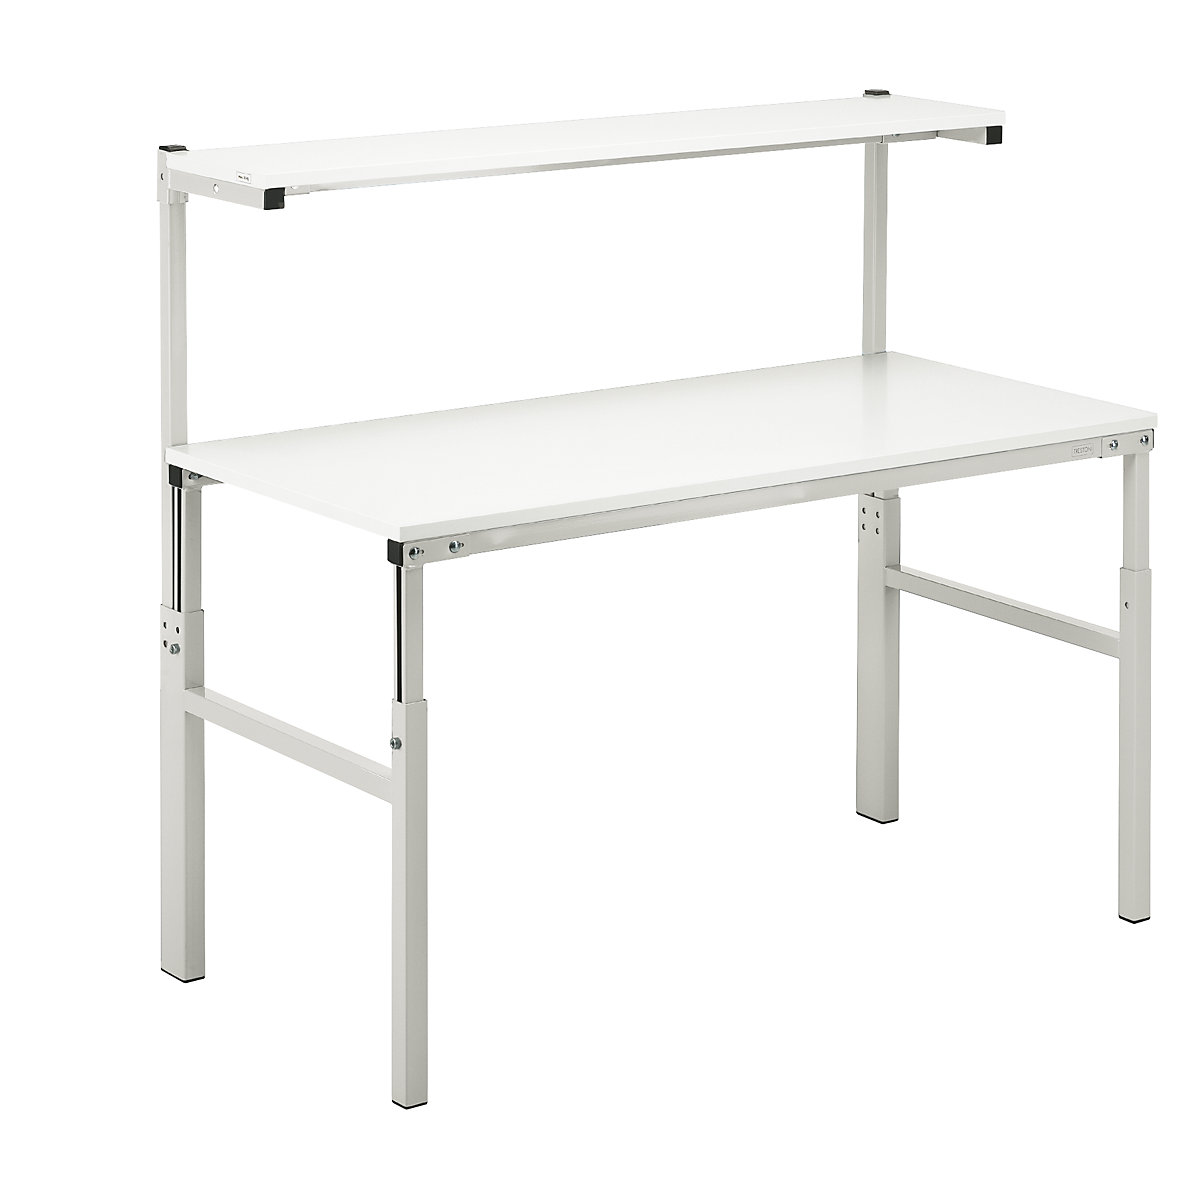 Standard table with shelf - Treston